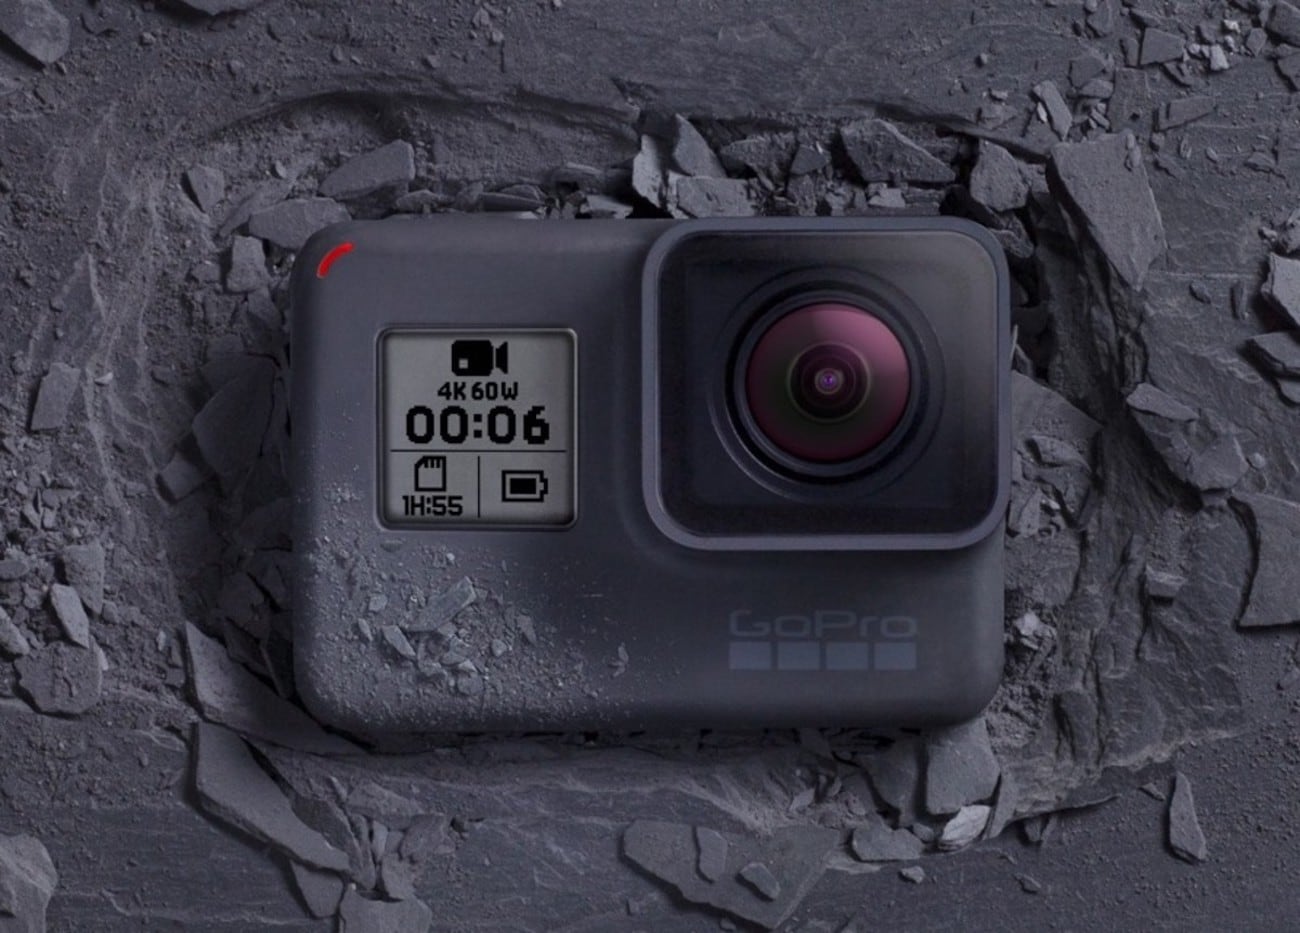 gopro camera control software